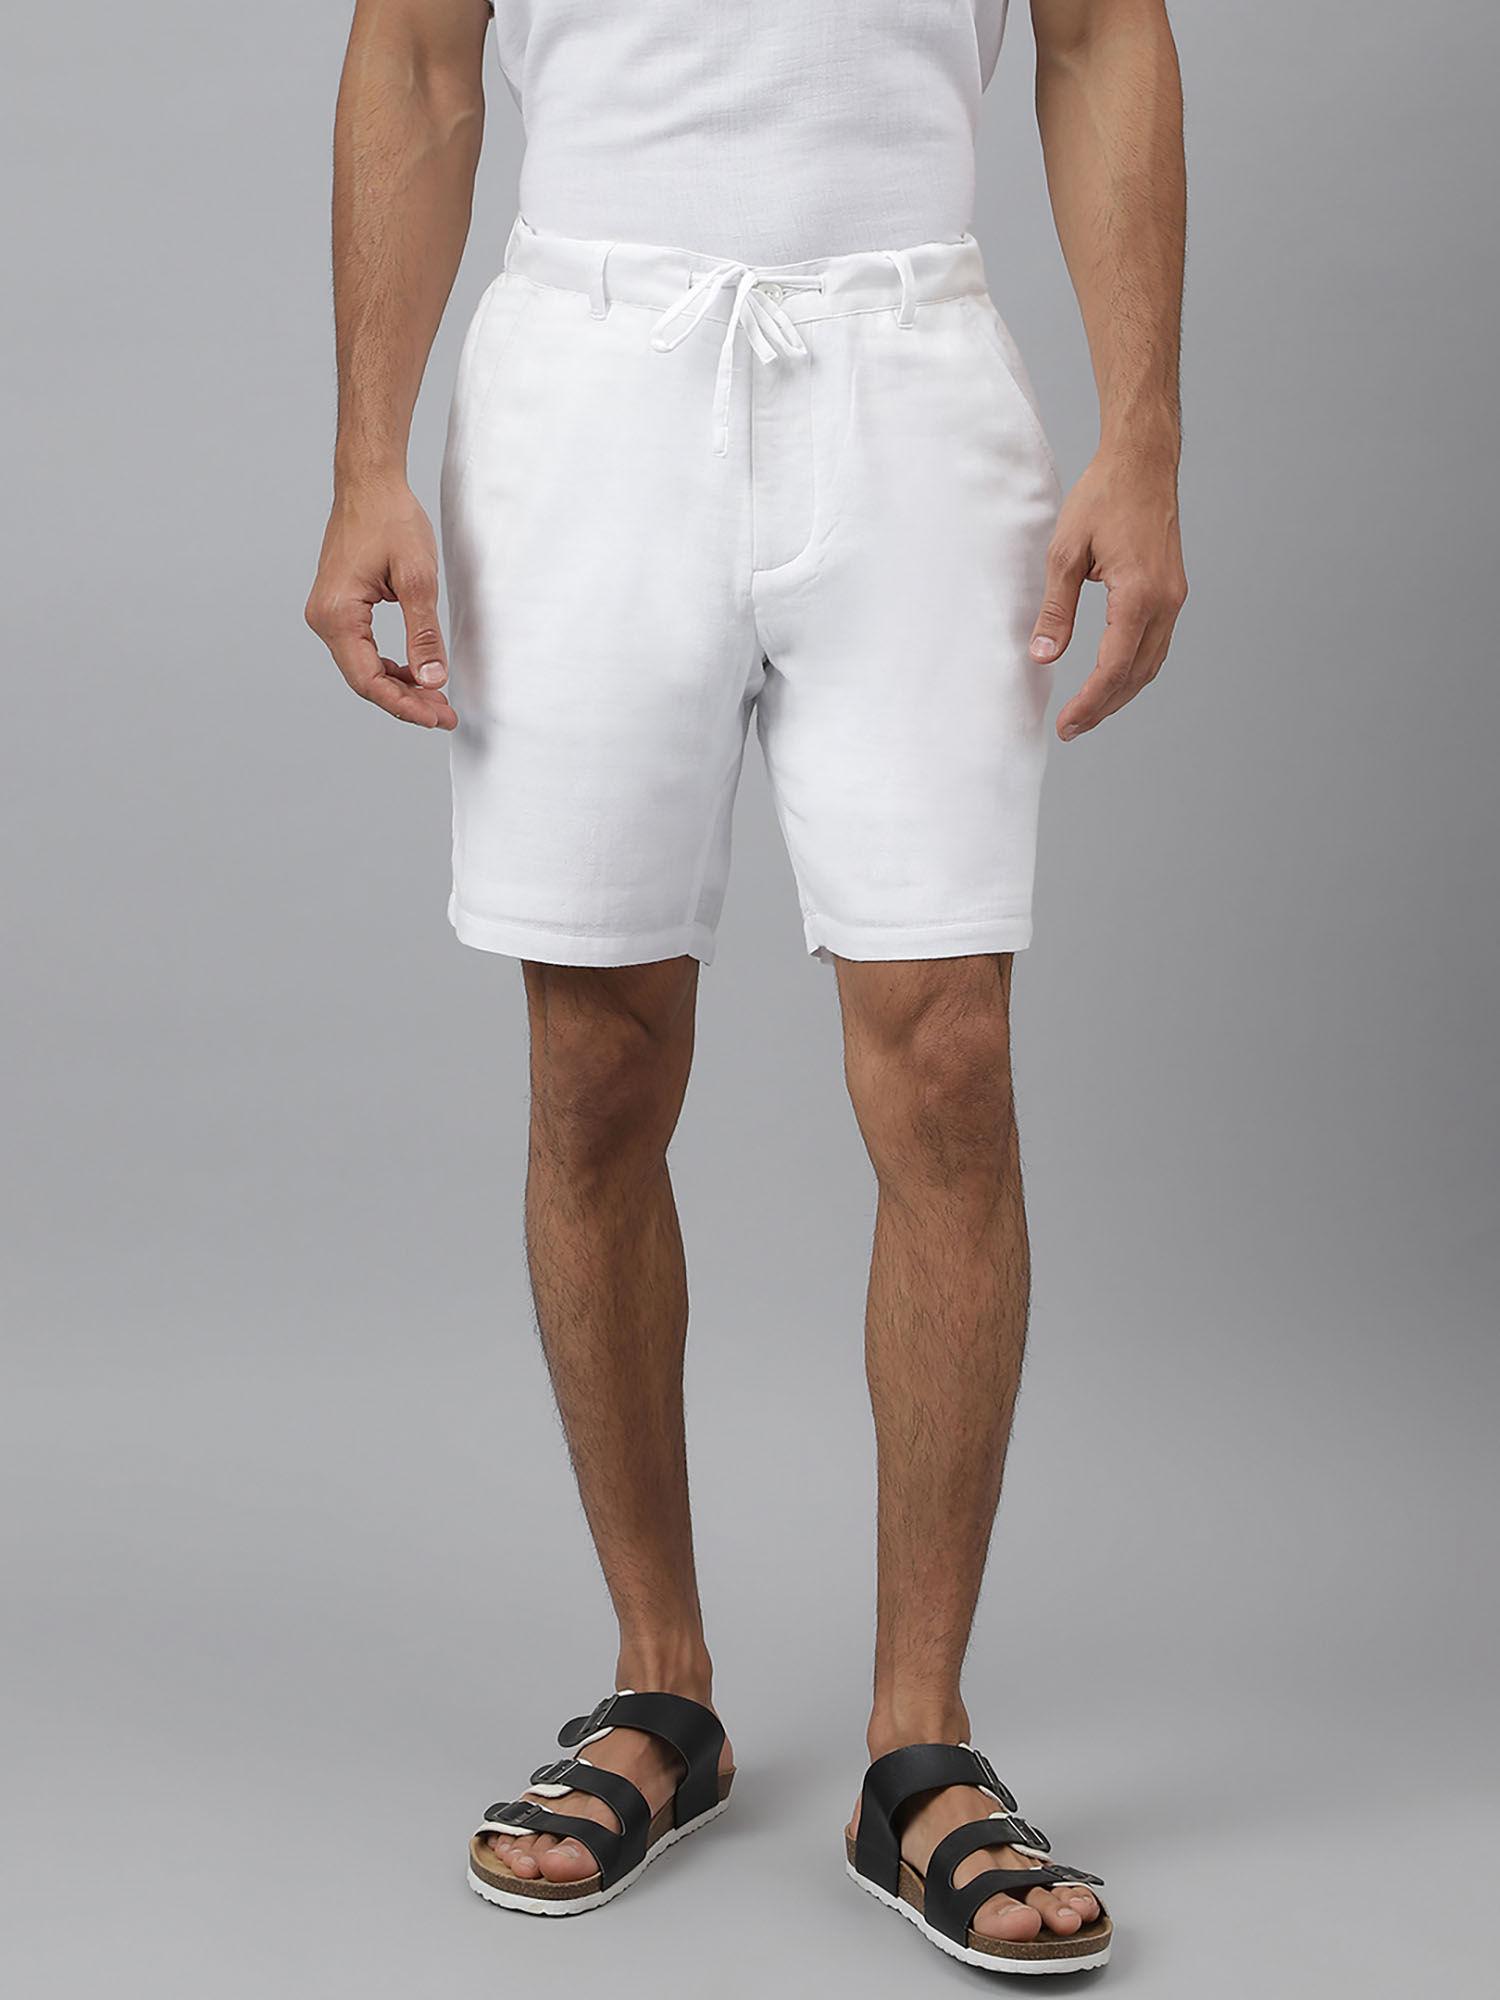 zen way-elasticated waist with drawstring cotton white shorts